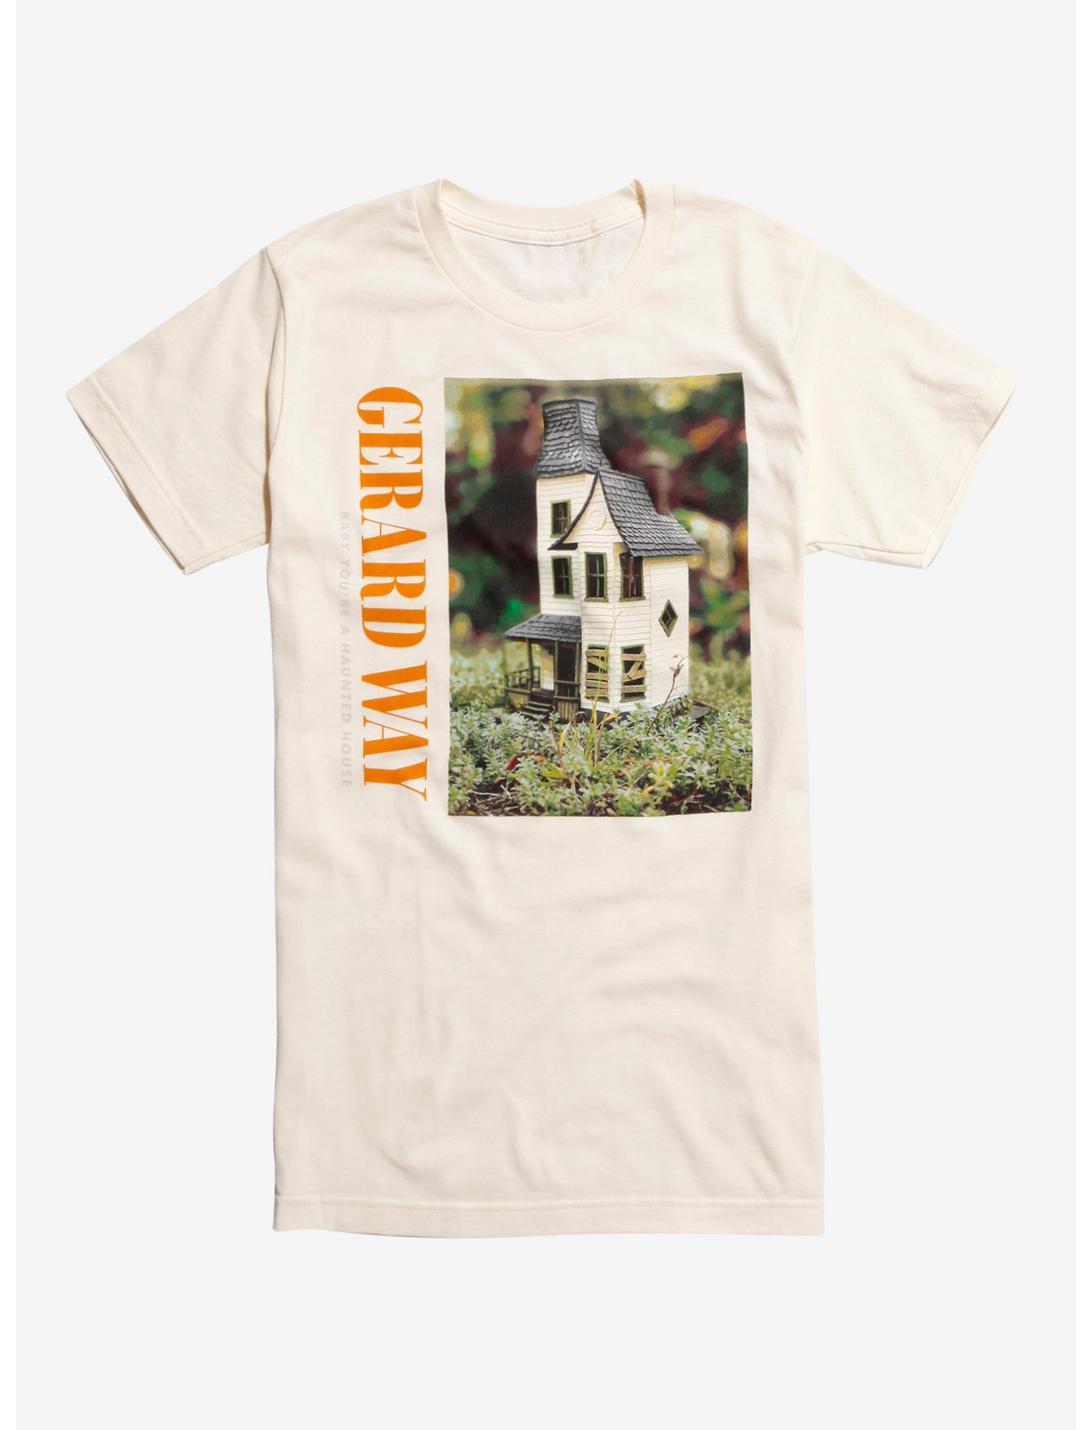 Gerard Way Haunted House T-Shirt, WHITE, hi-res